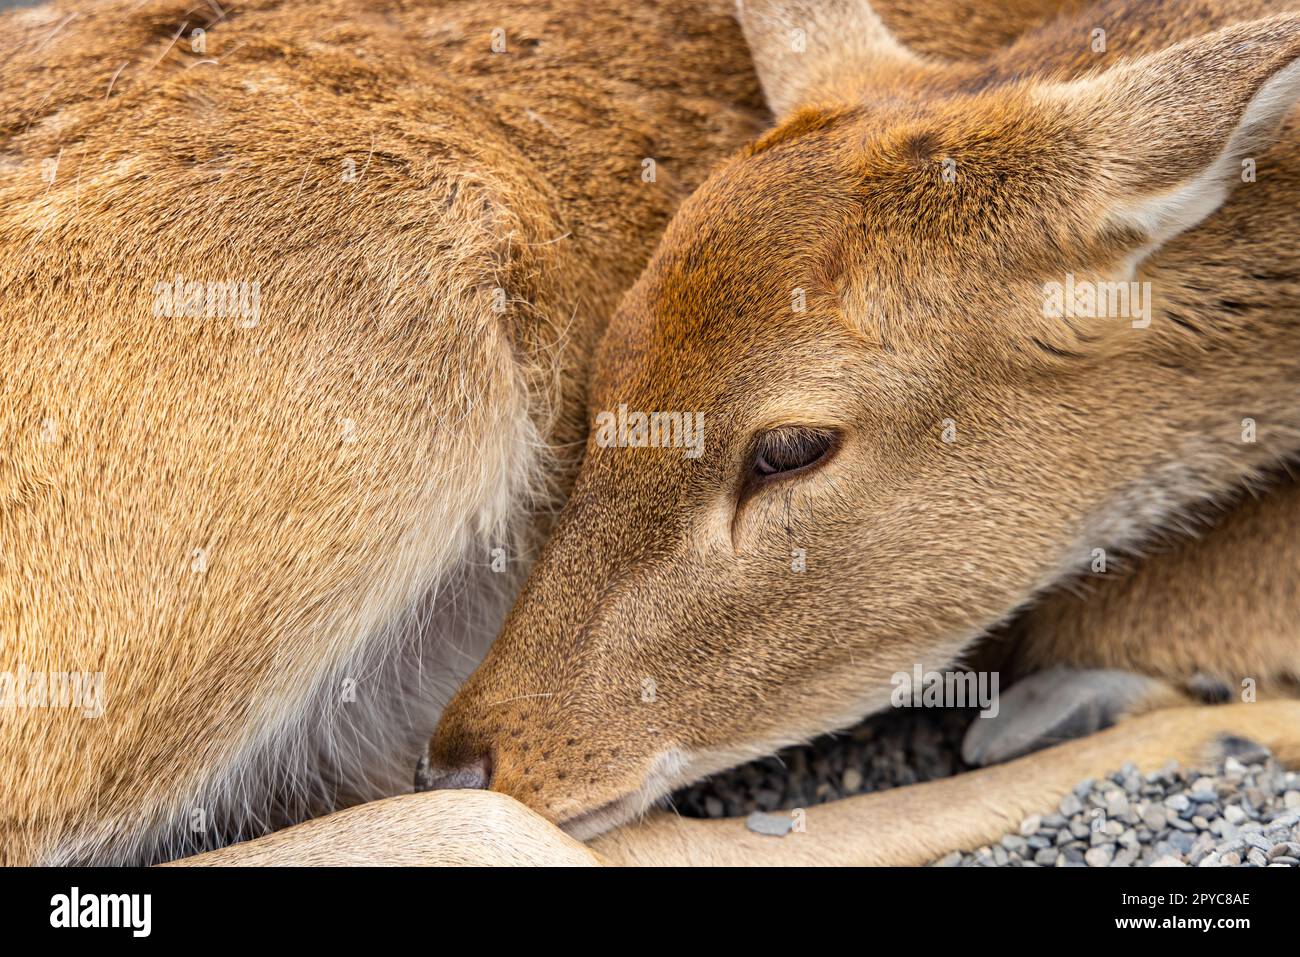 Graceful deer taking a peaceful nap Stock Photo